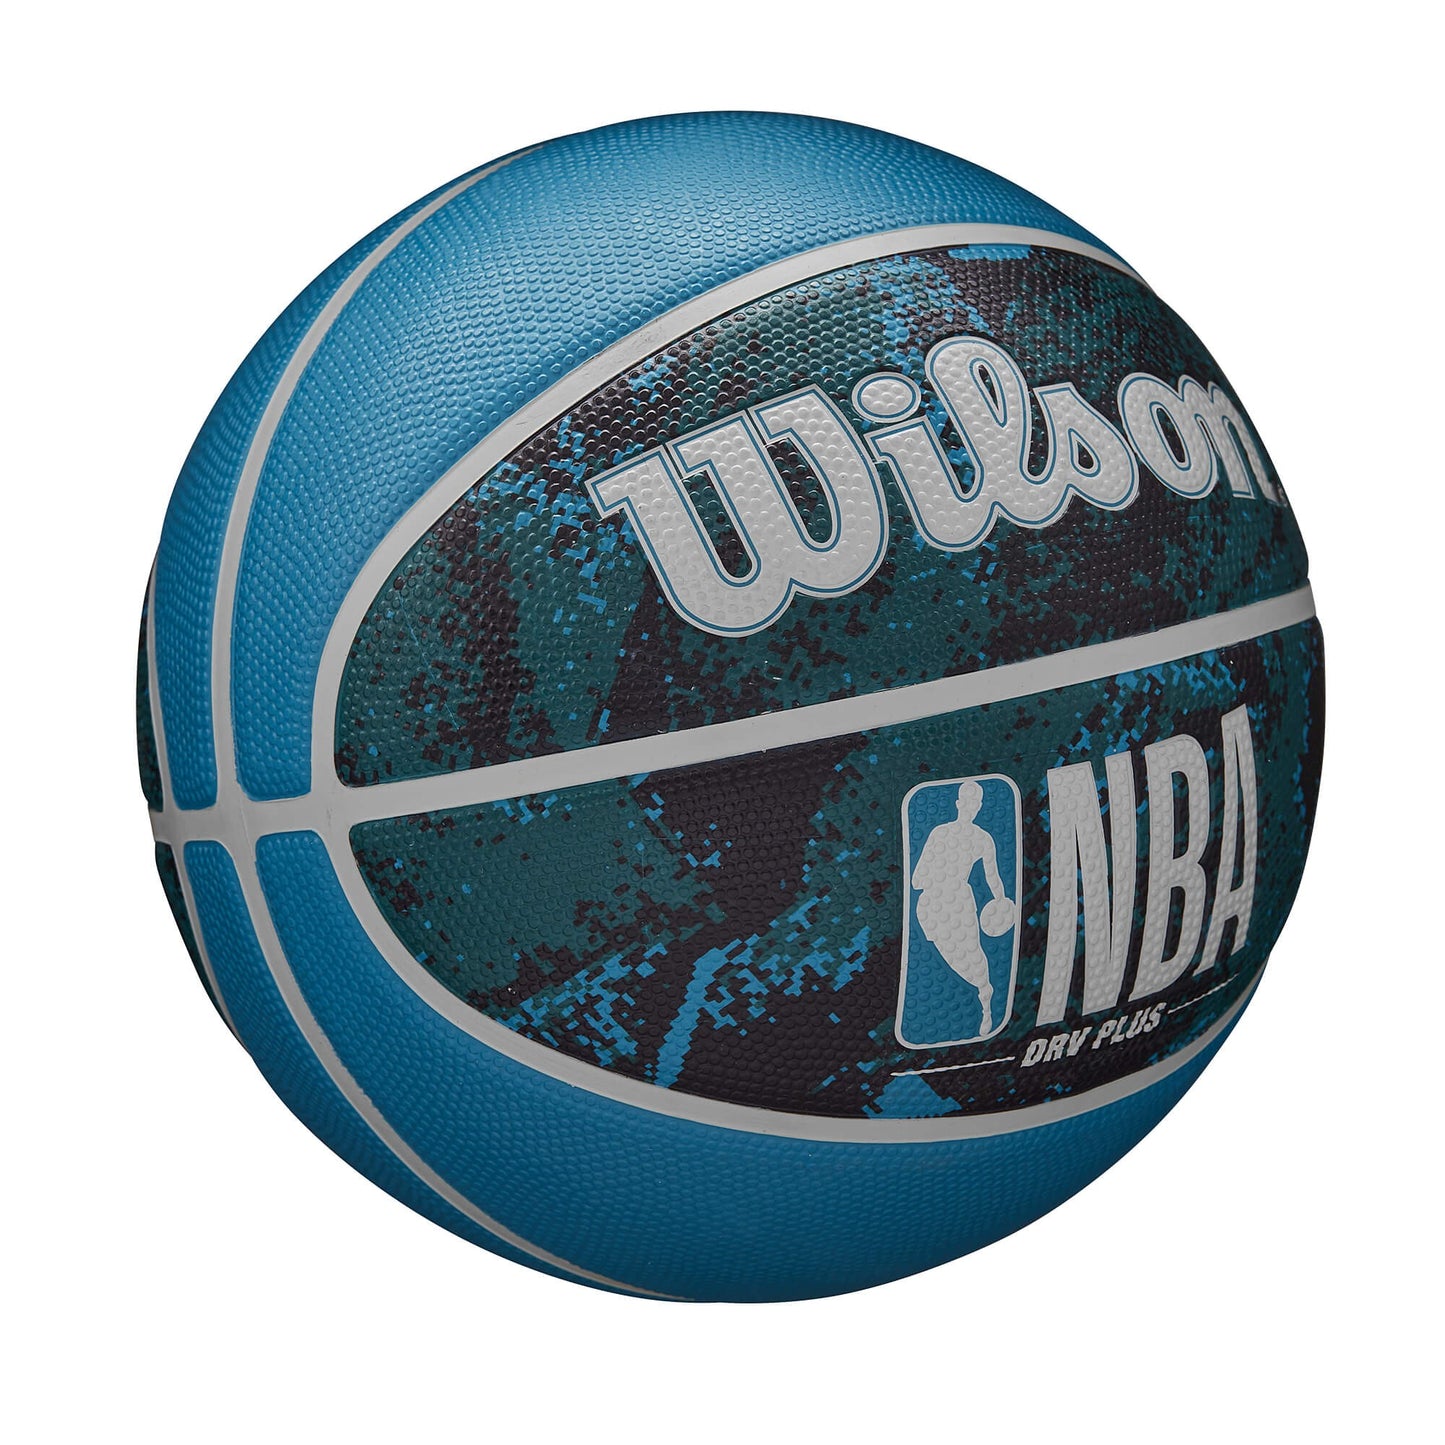 Wilson NBA Drv Plus Vibe Bskt - Black/Blue (sz. 7)